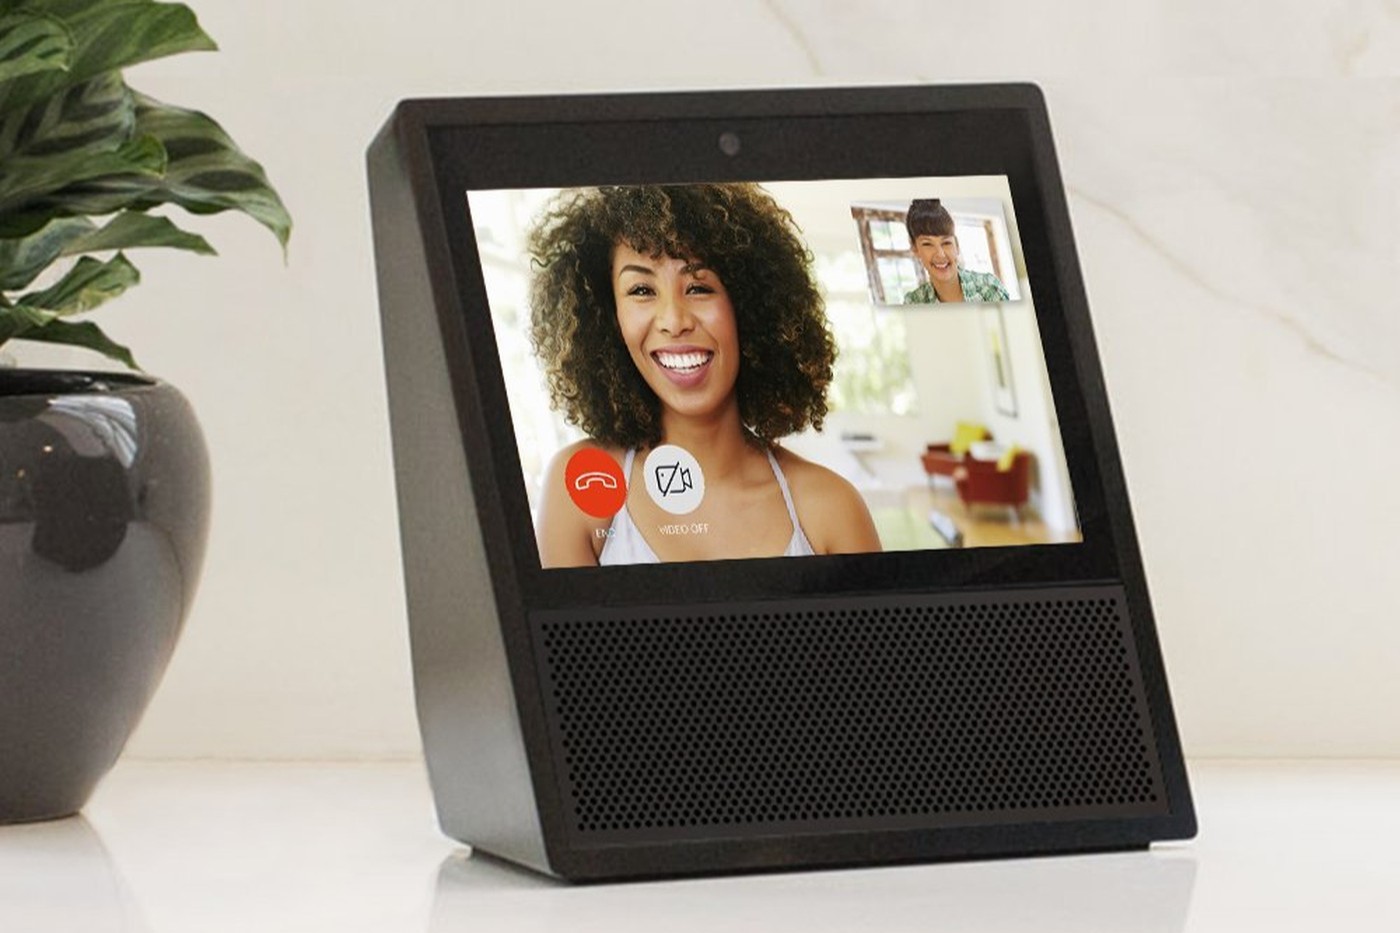 What Do You Need For Amazon Echo Skype